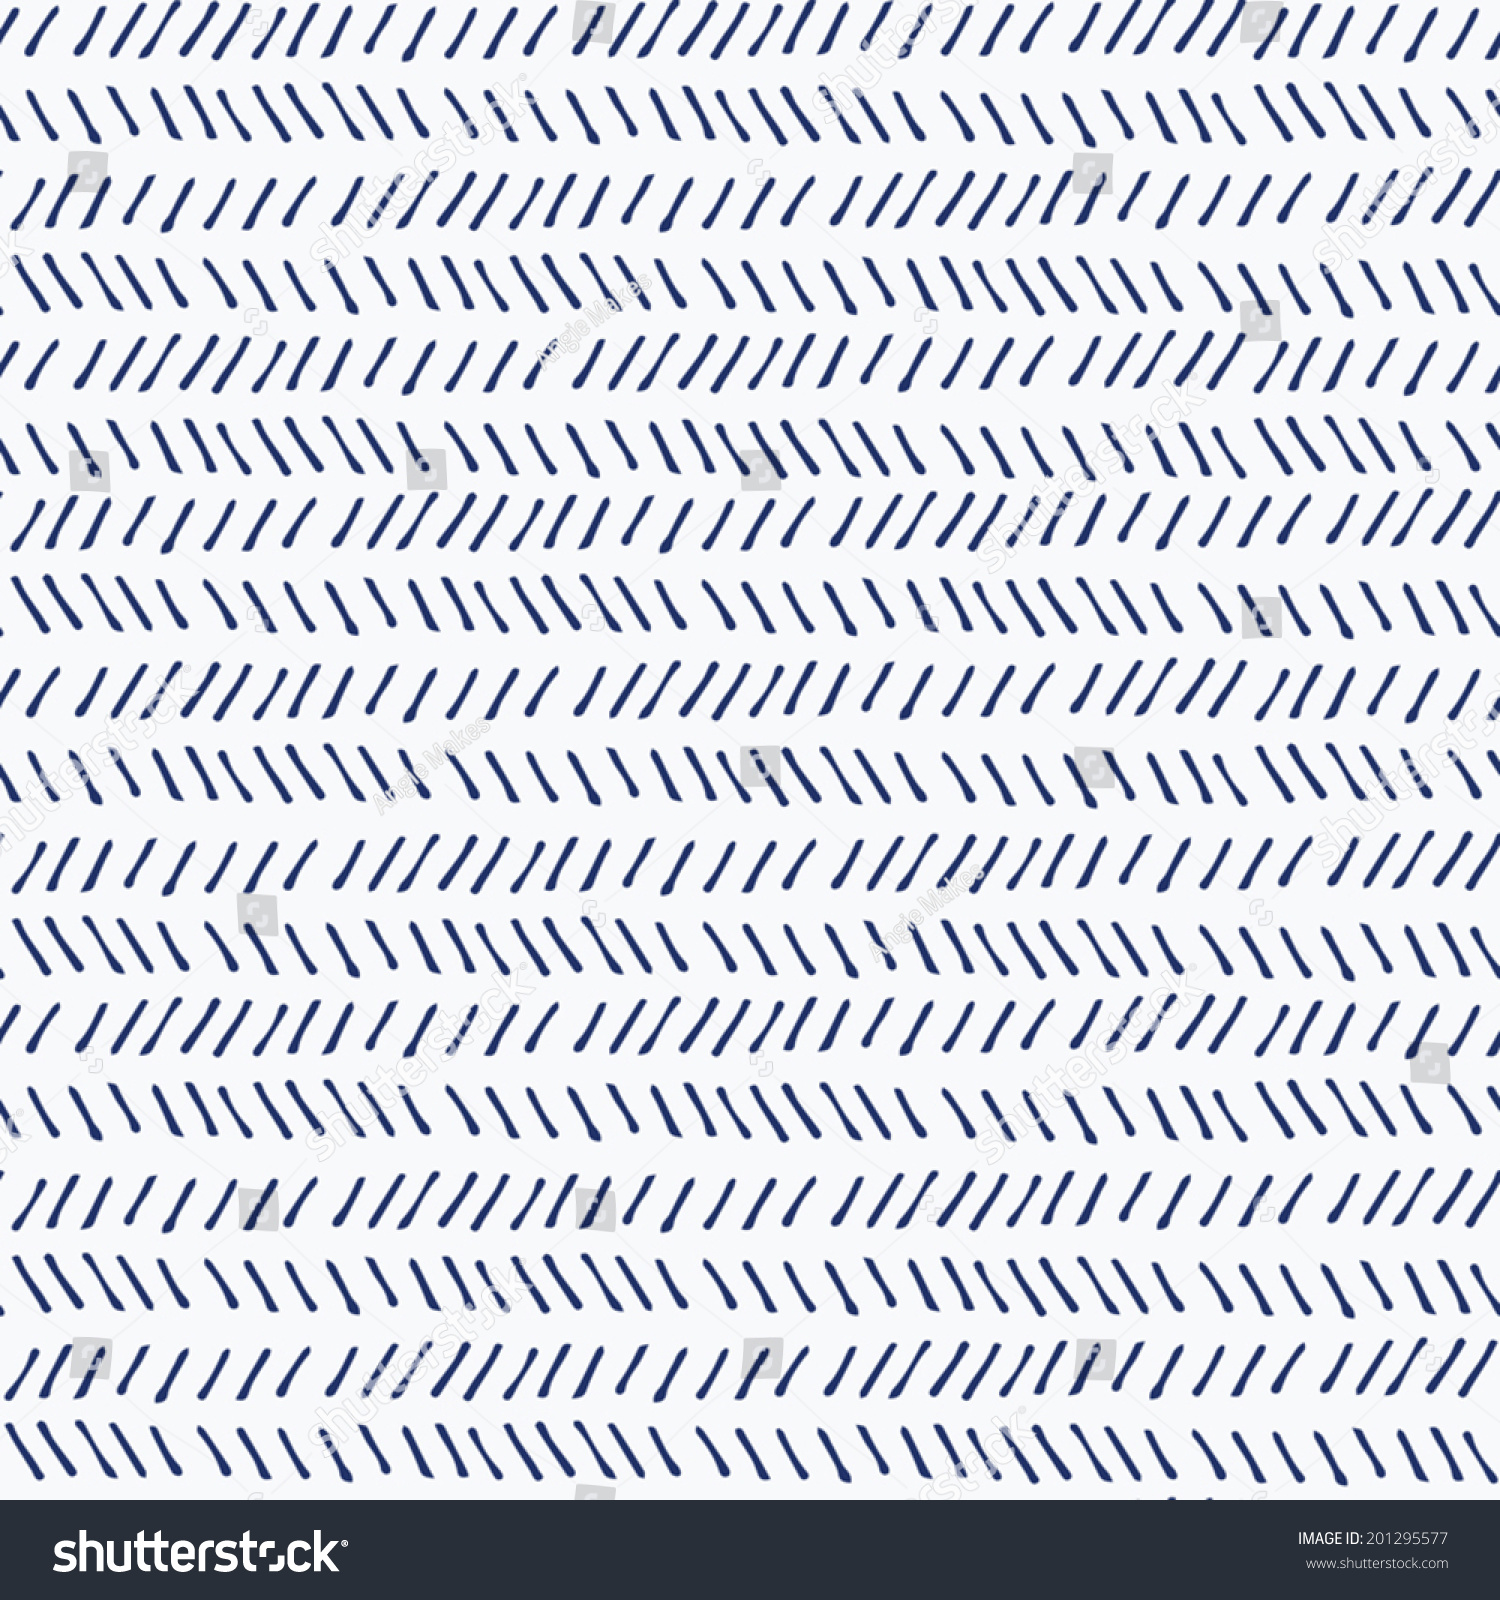 stock-vector-seamless-geometric-background-pattern-vector-201295577.jpg